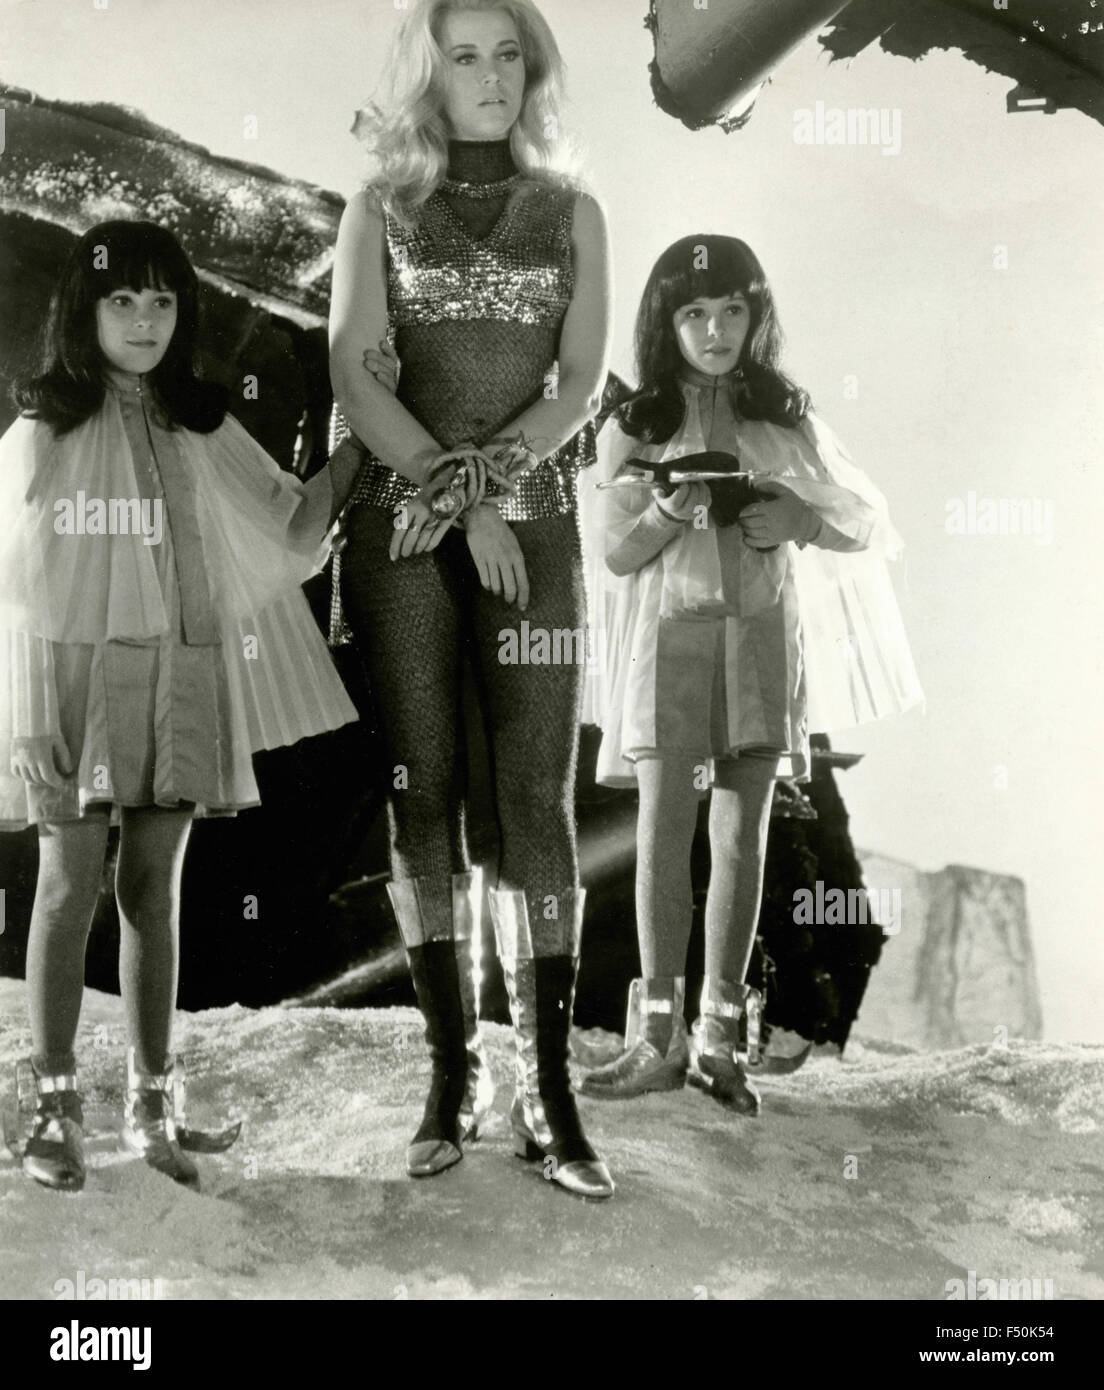 The actress Jane Fonda in a scene from the film 'Barbarella', 1968 Stock Photo